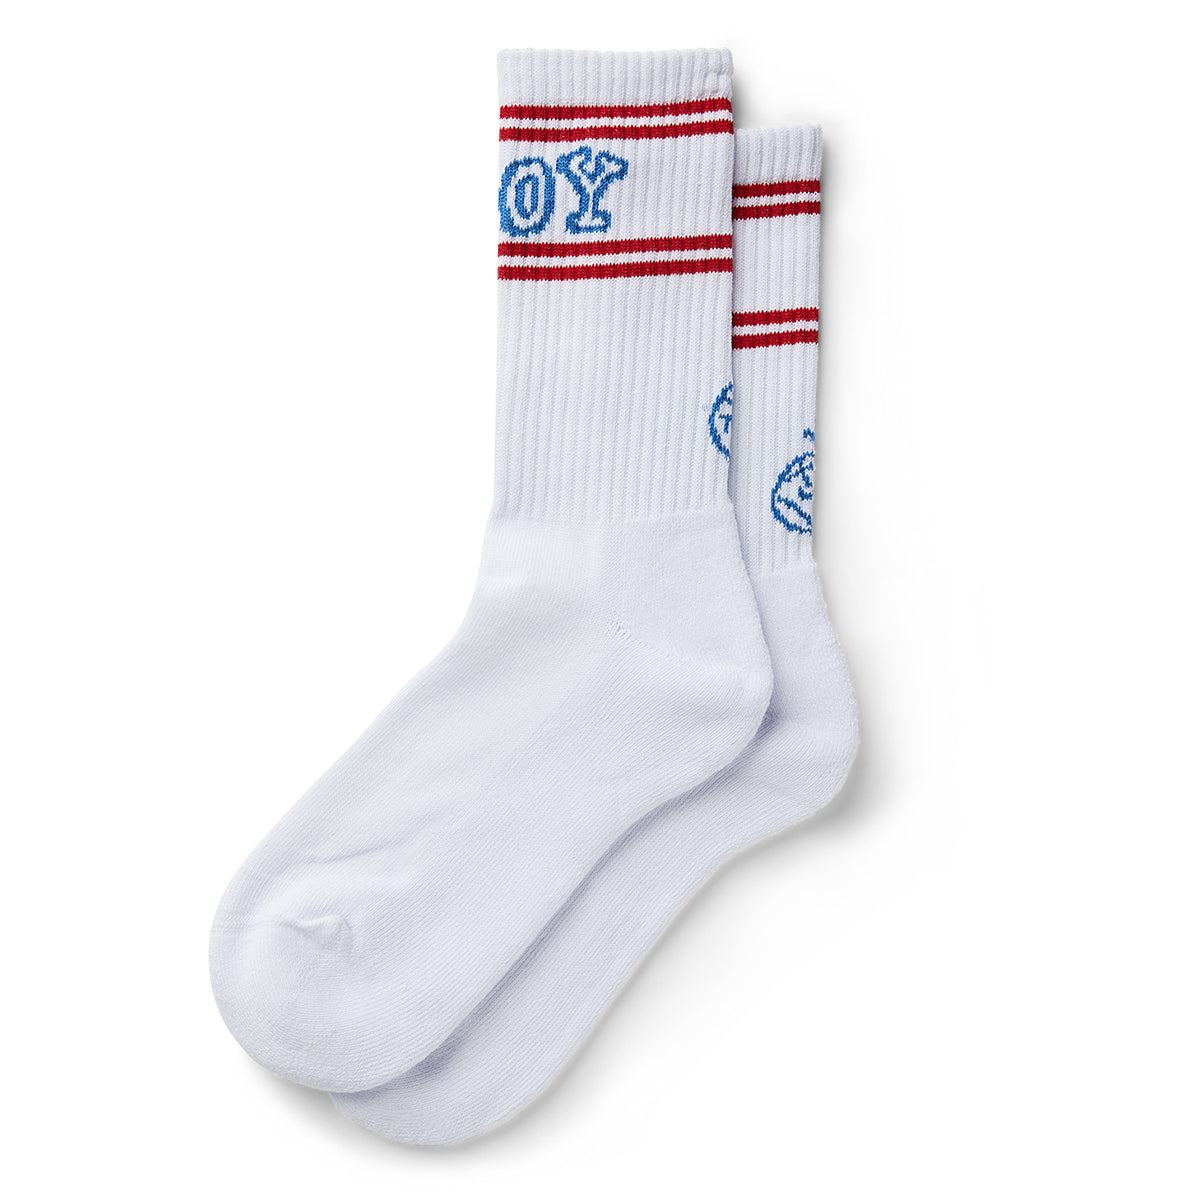 Polar Skate Co. Big Boy Socks White/Blue/Red